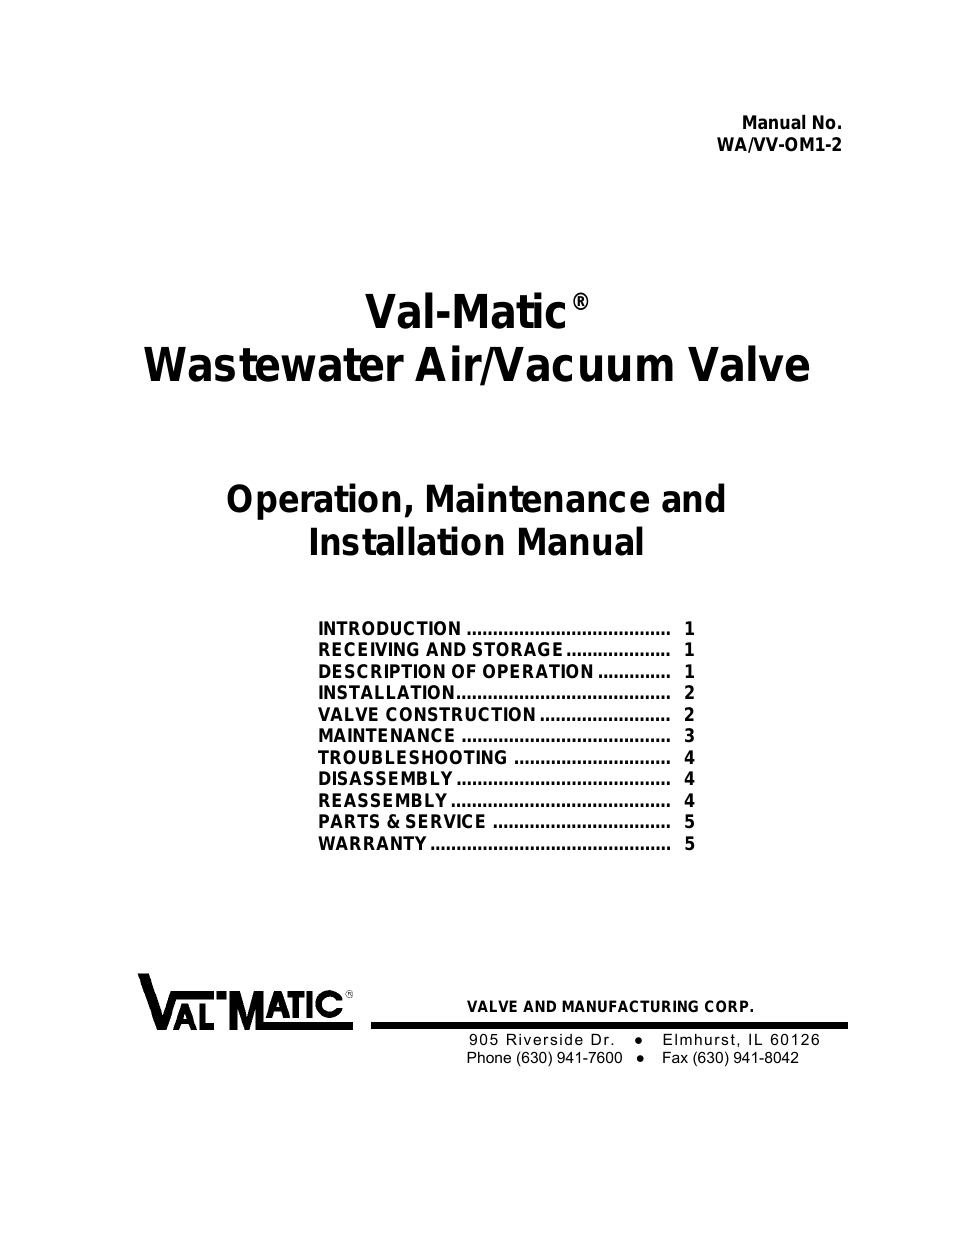 Wastewater Air/Vacuum Valve